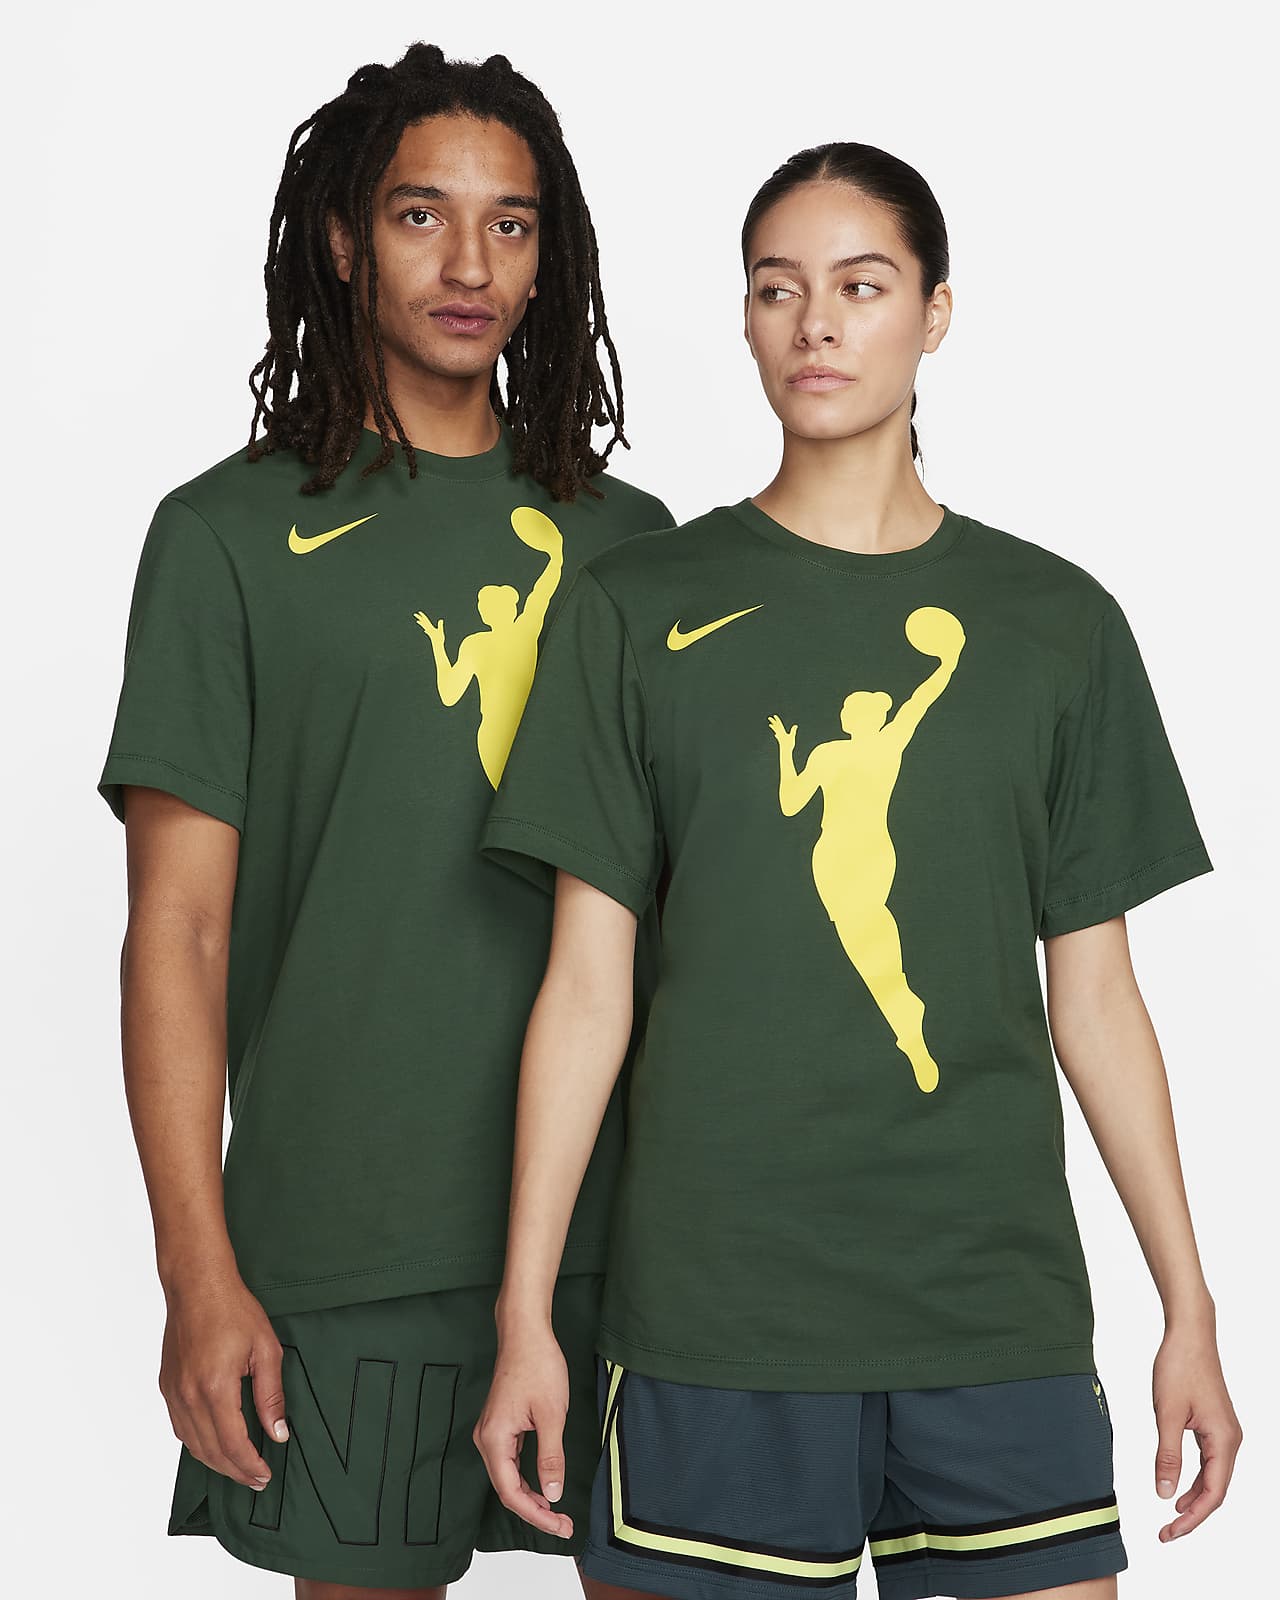 Team 13 Nike WNBA T-Shirt